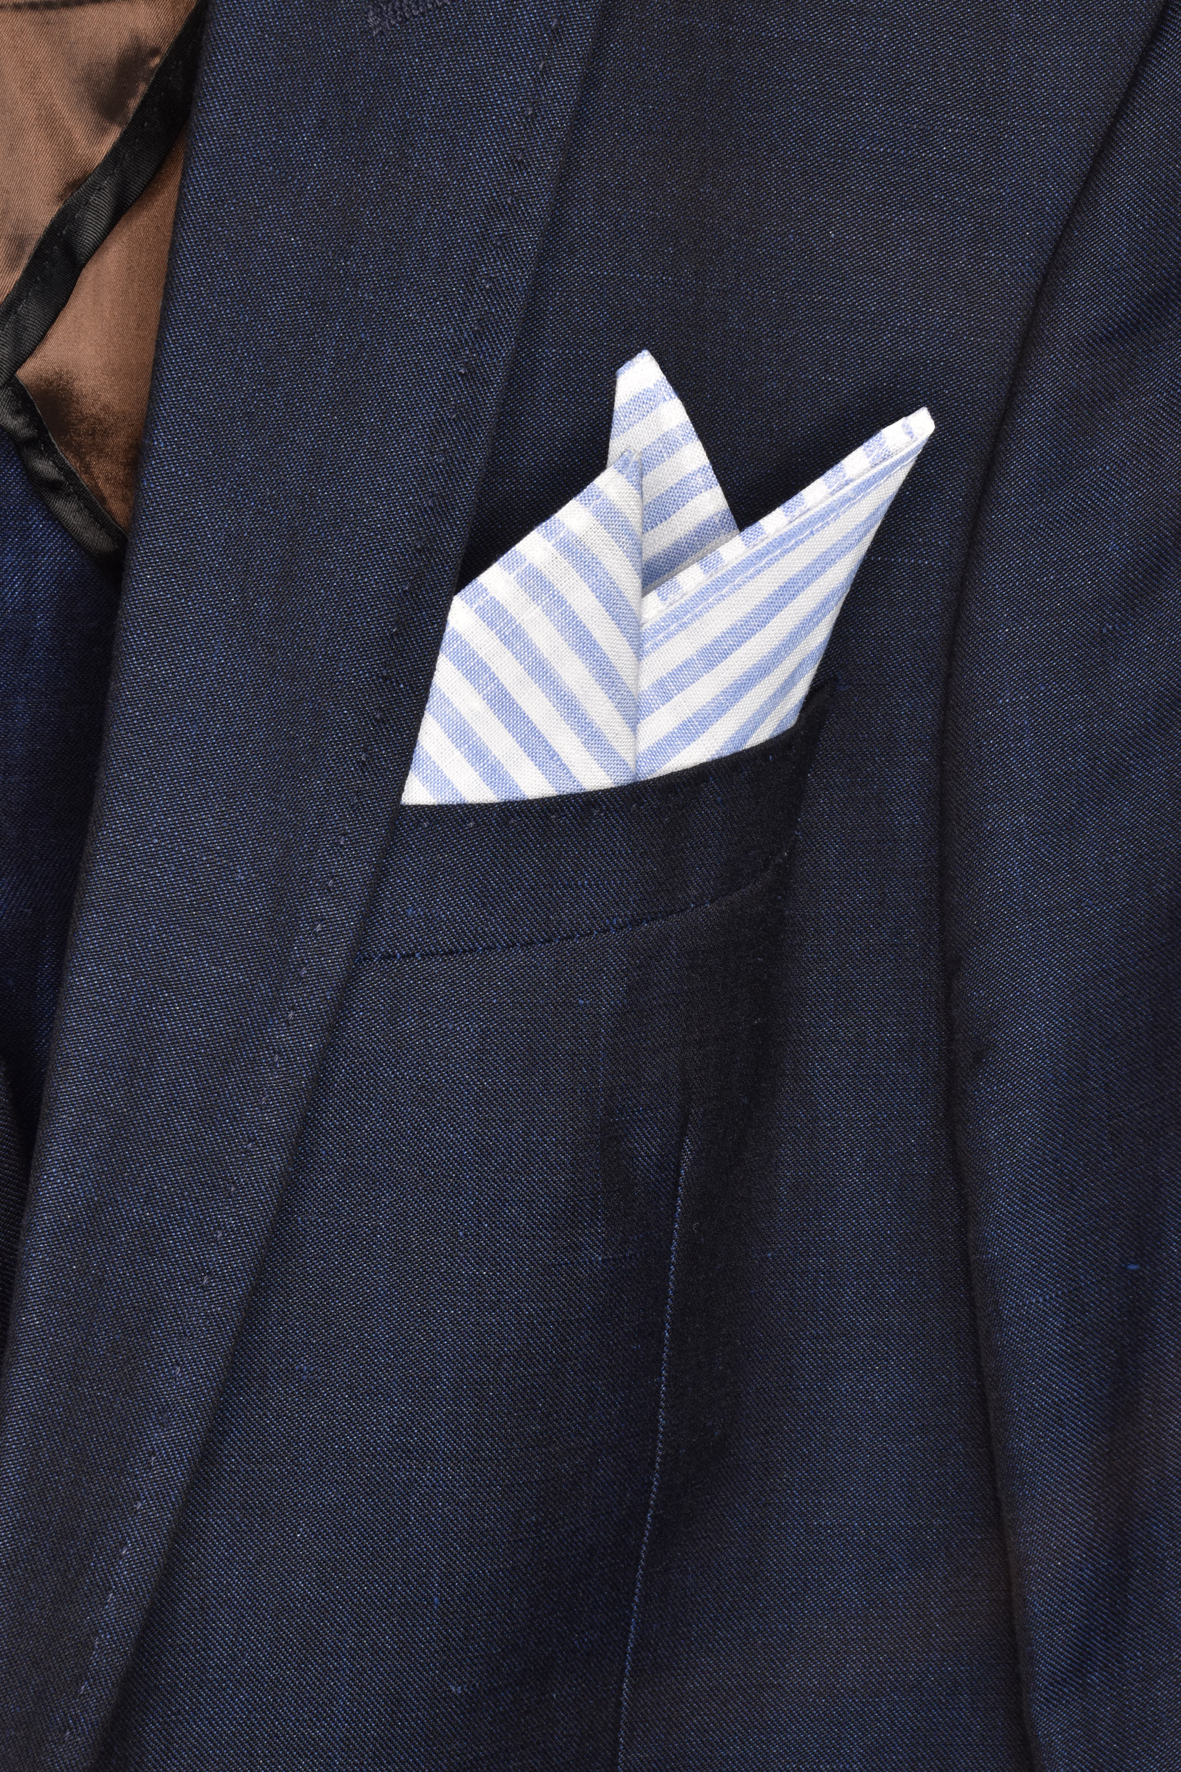 Pochette celeste rigato / blue and white striped pocket square